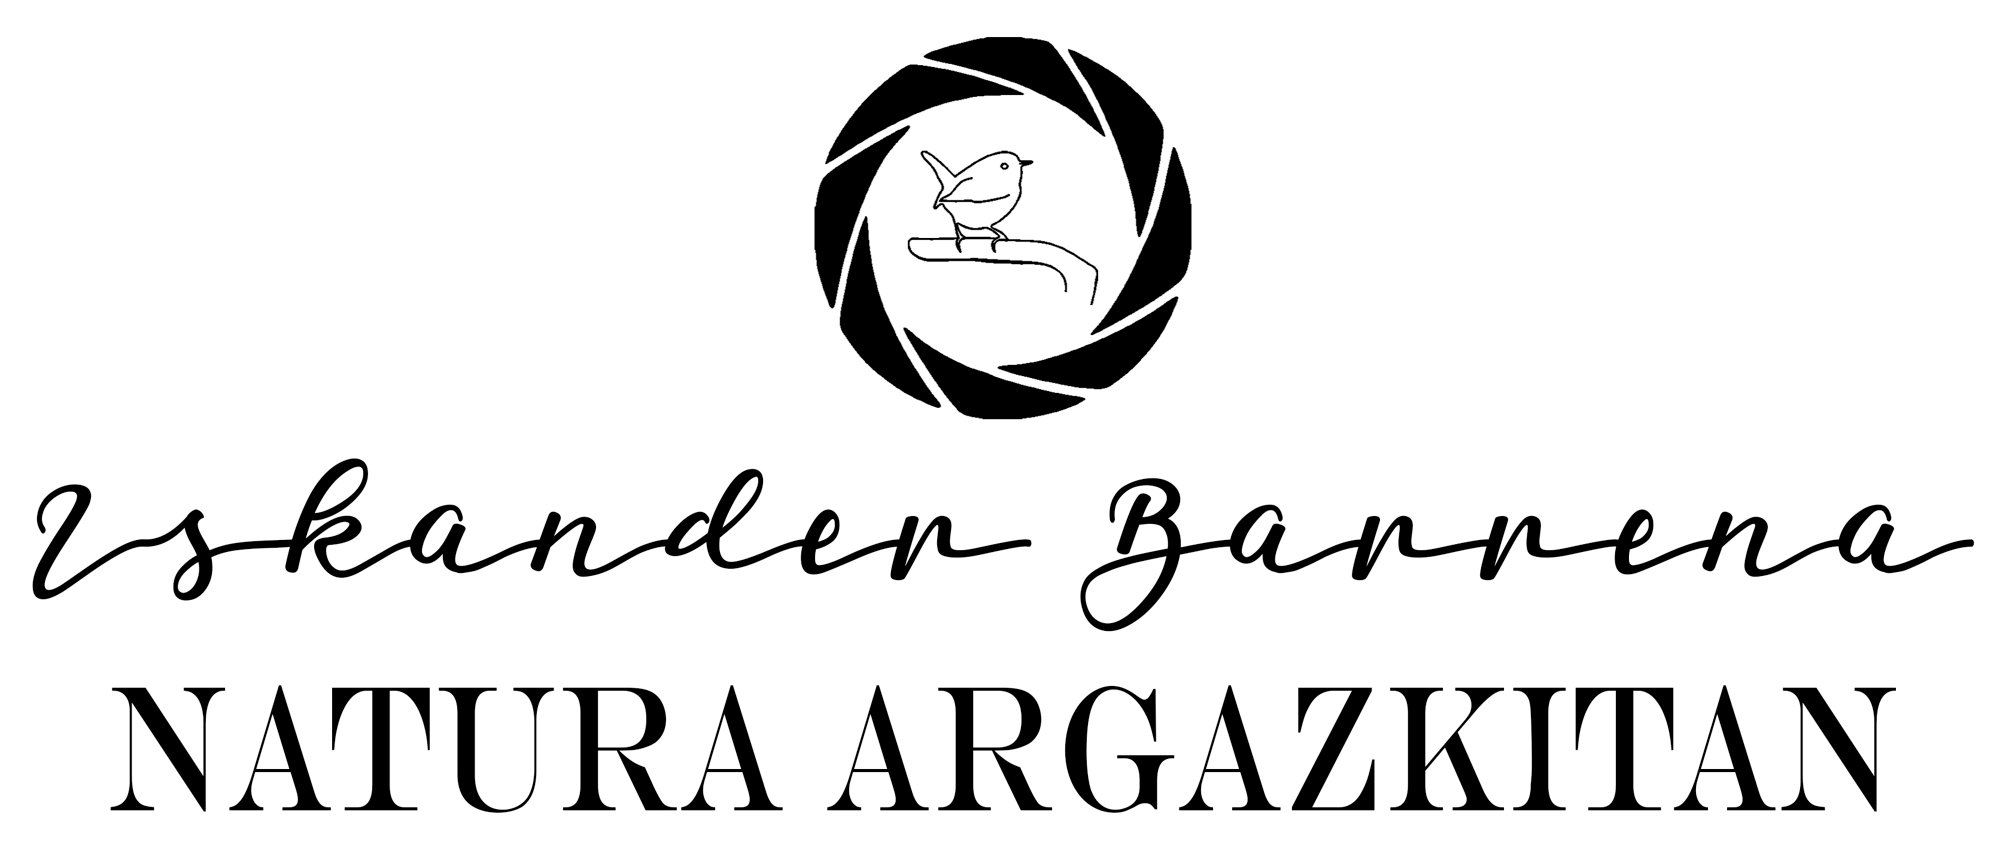 Iskander Barrena Zubiaur - NATURA ARGAZKITAN - negro-blanco-logo-encima-naturaargazkitan.png